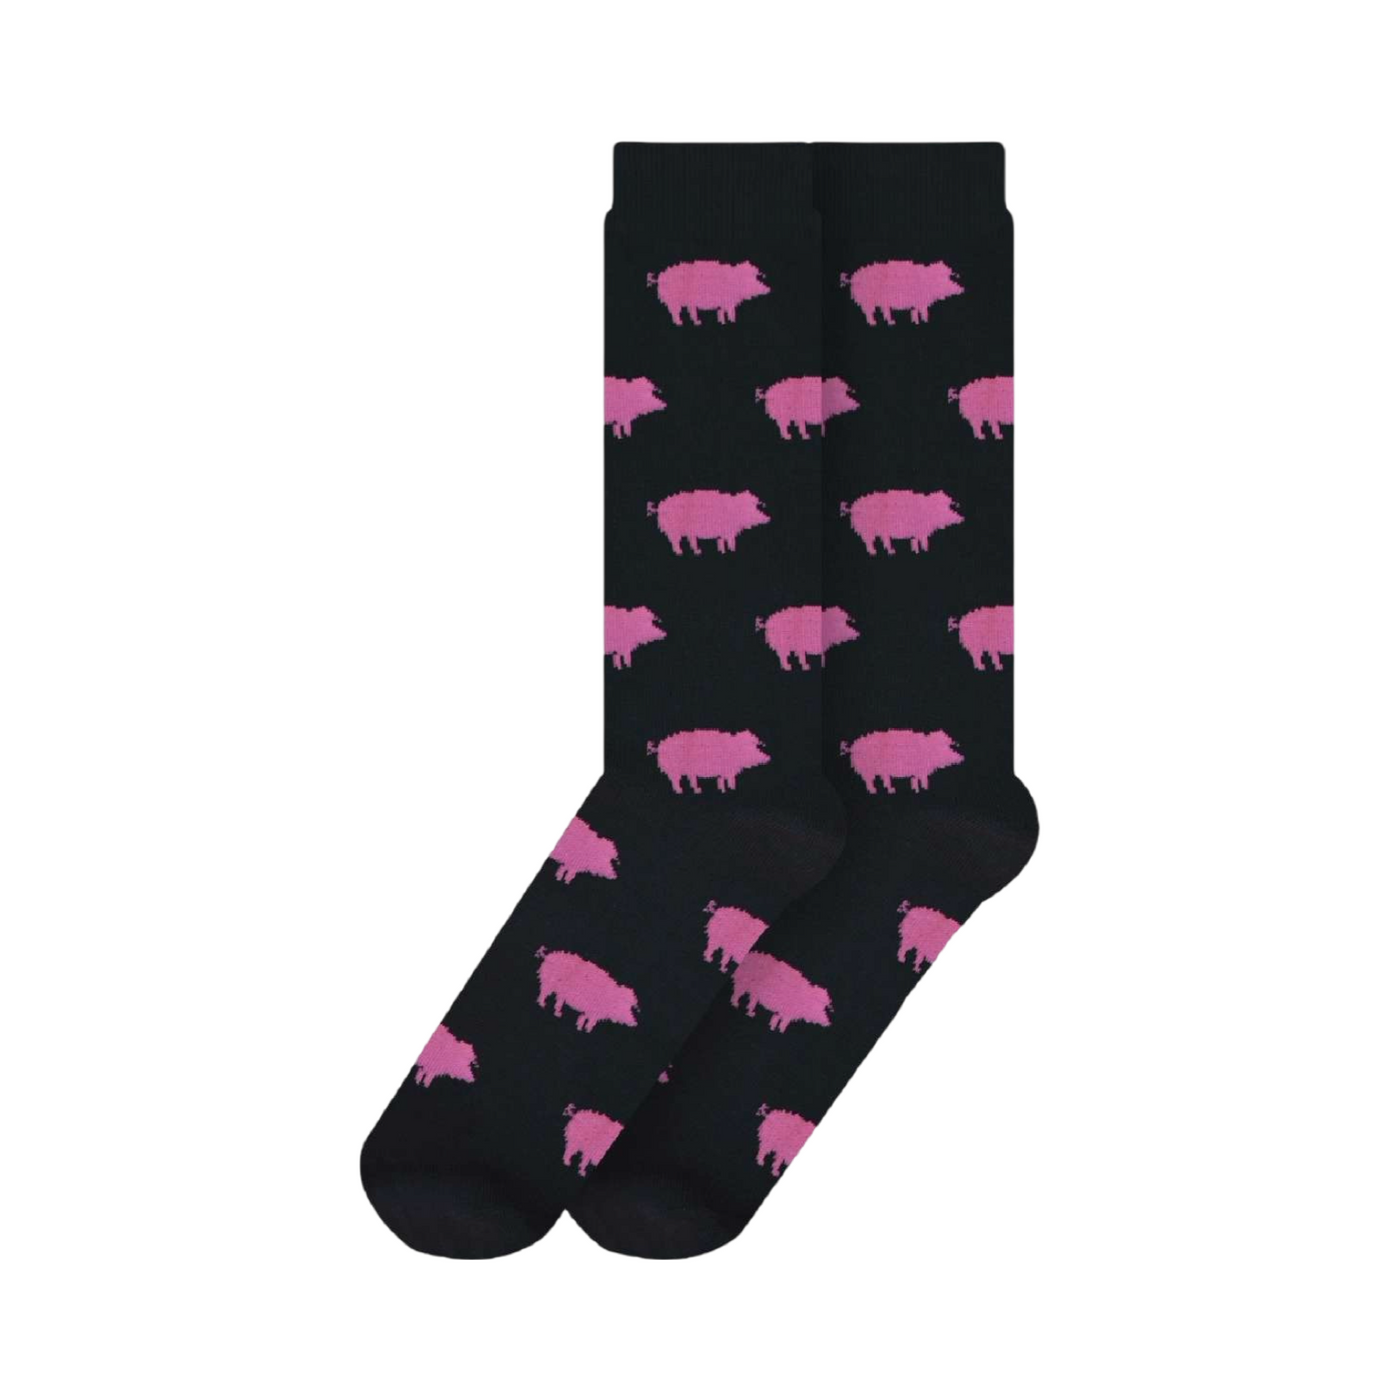 Pair of dark grey socks with images of pink pigs